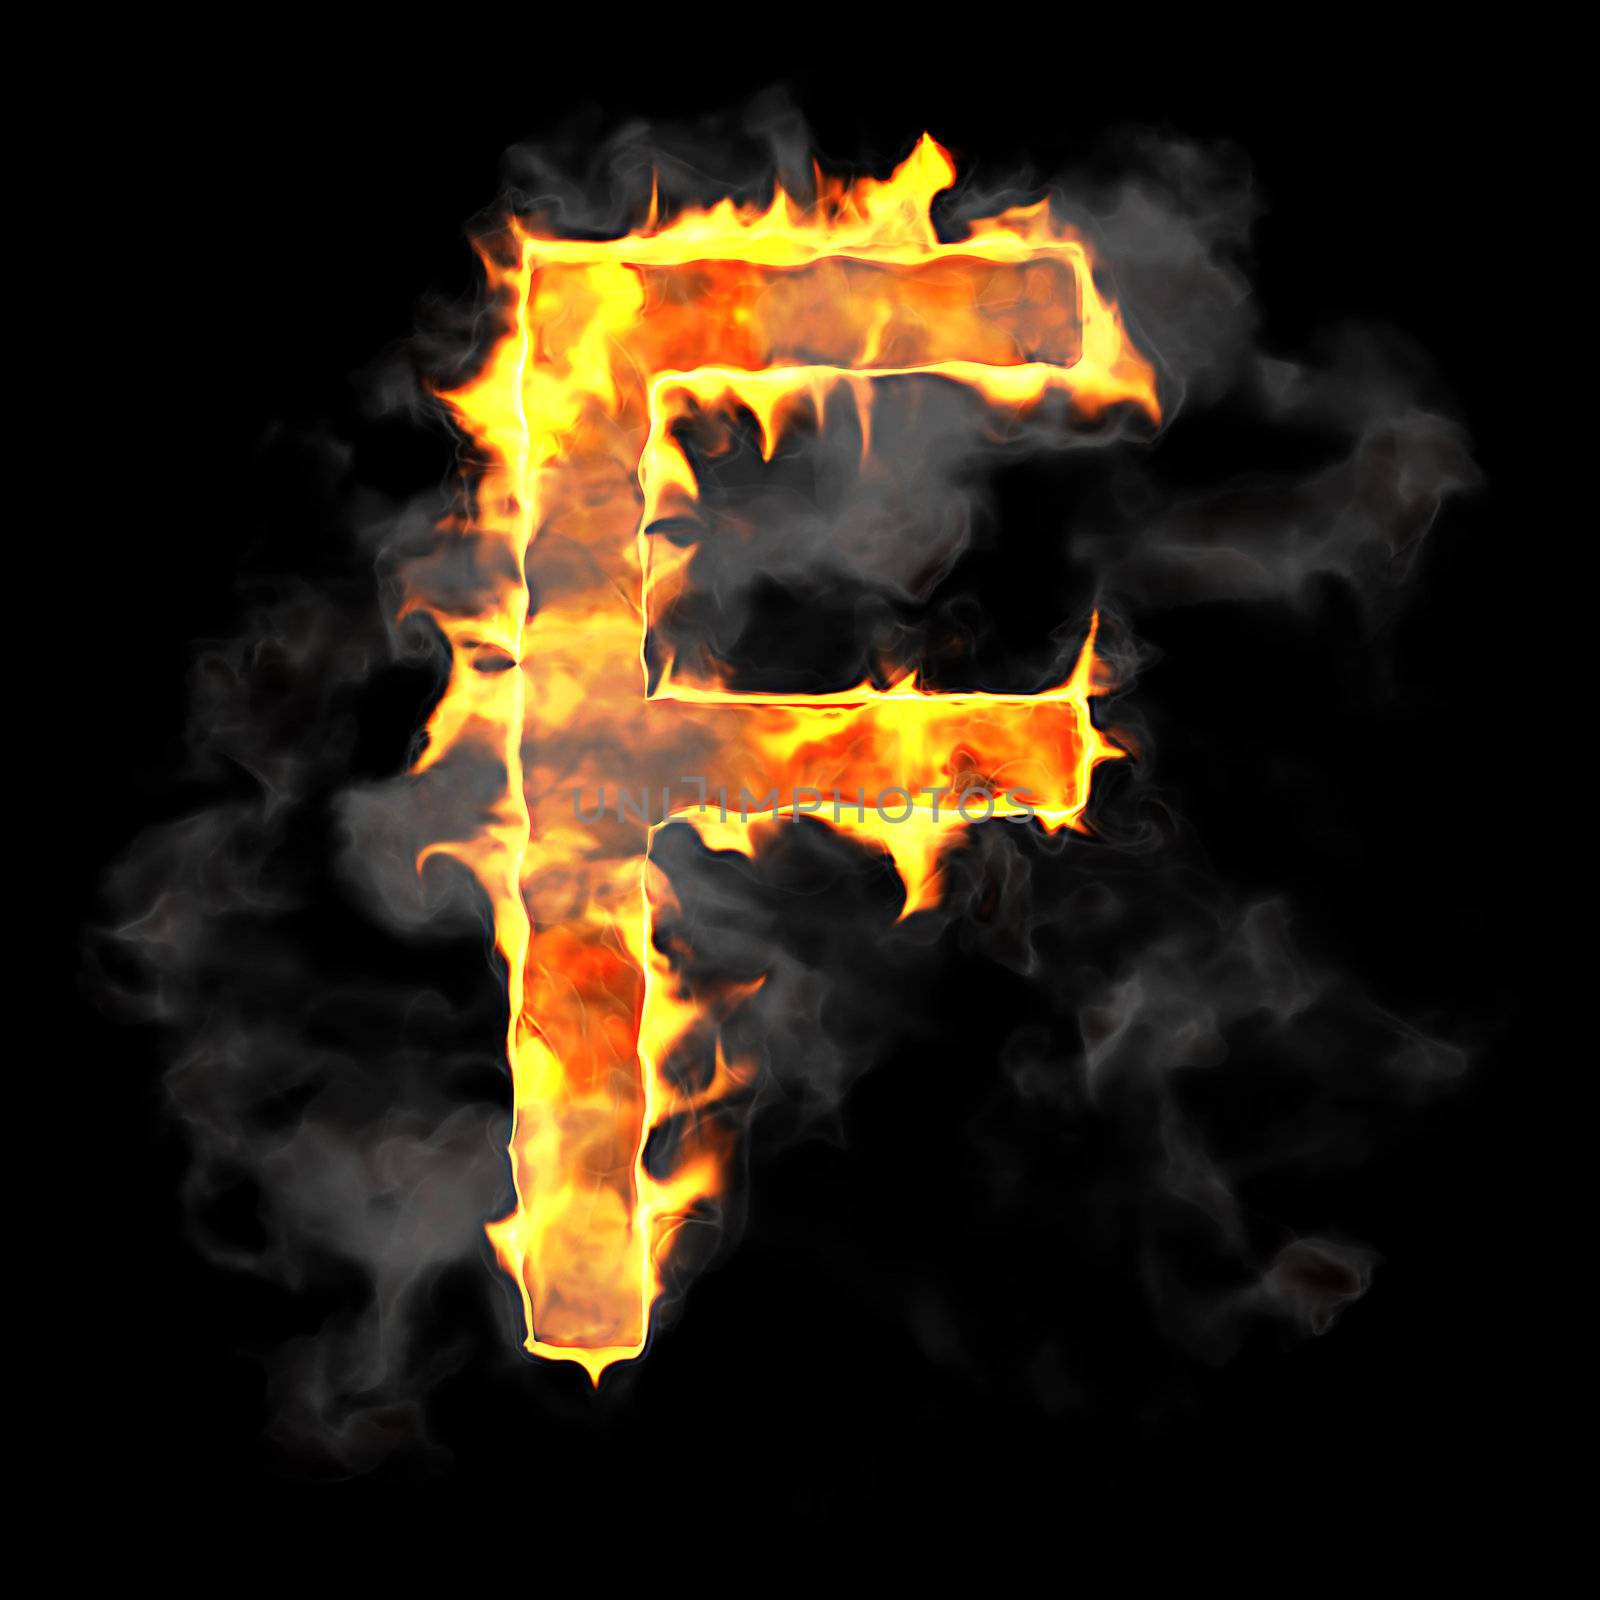 Burning and flame font F letter over black background